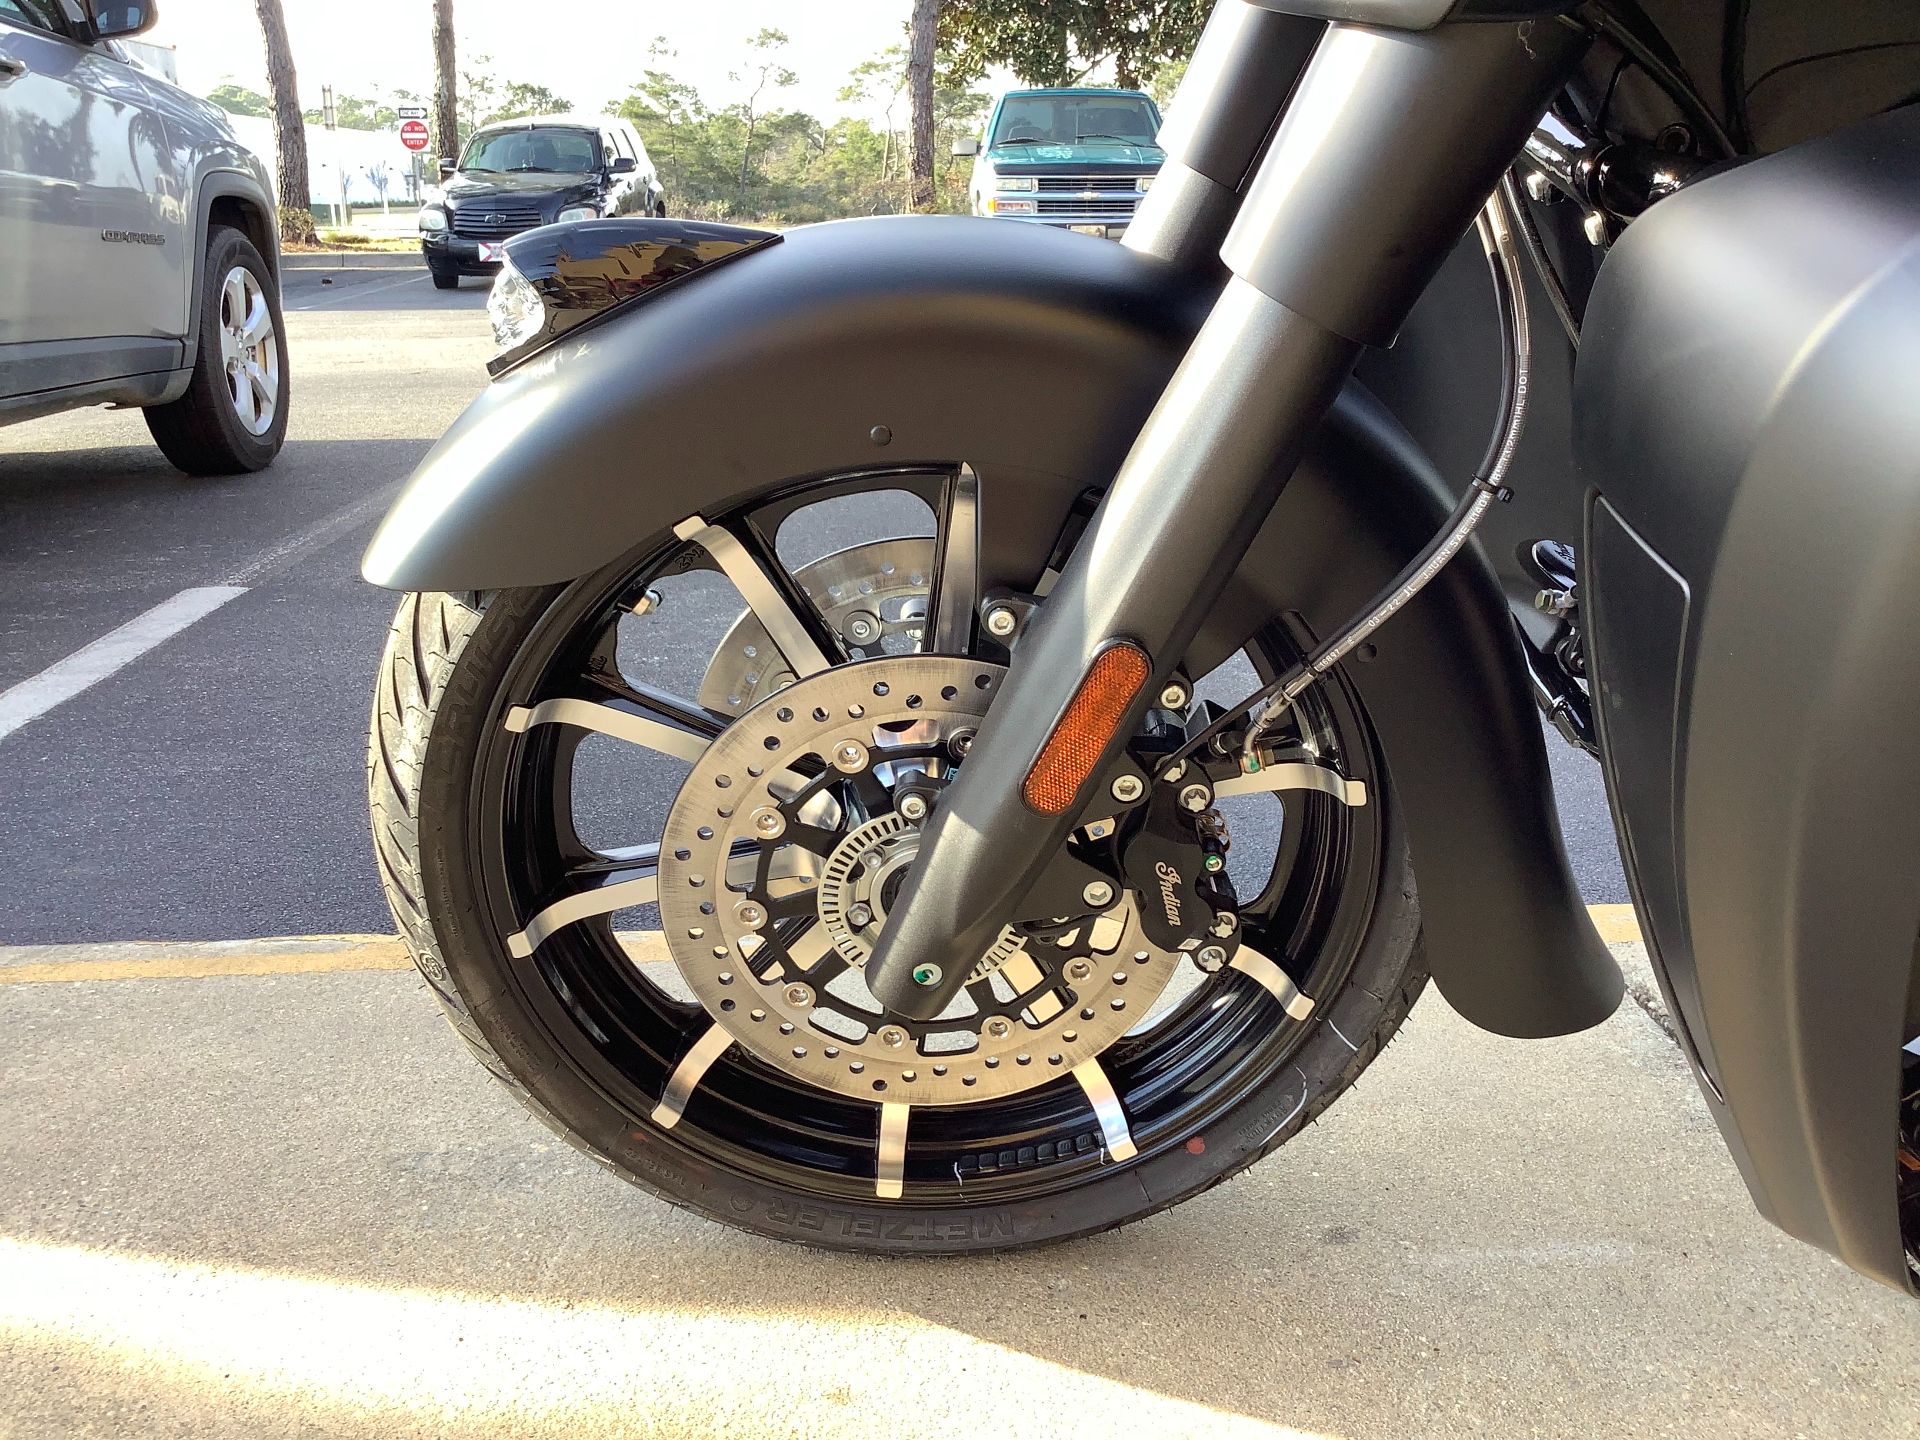 2023 Indian Motorcycle Roadmaster® Dark Horse® in Panama City Beach, Florida - Photo 17